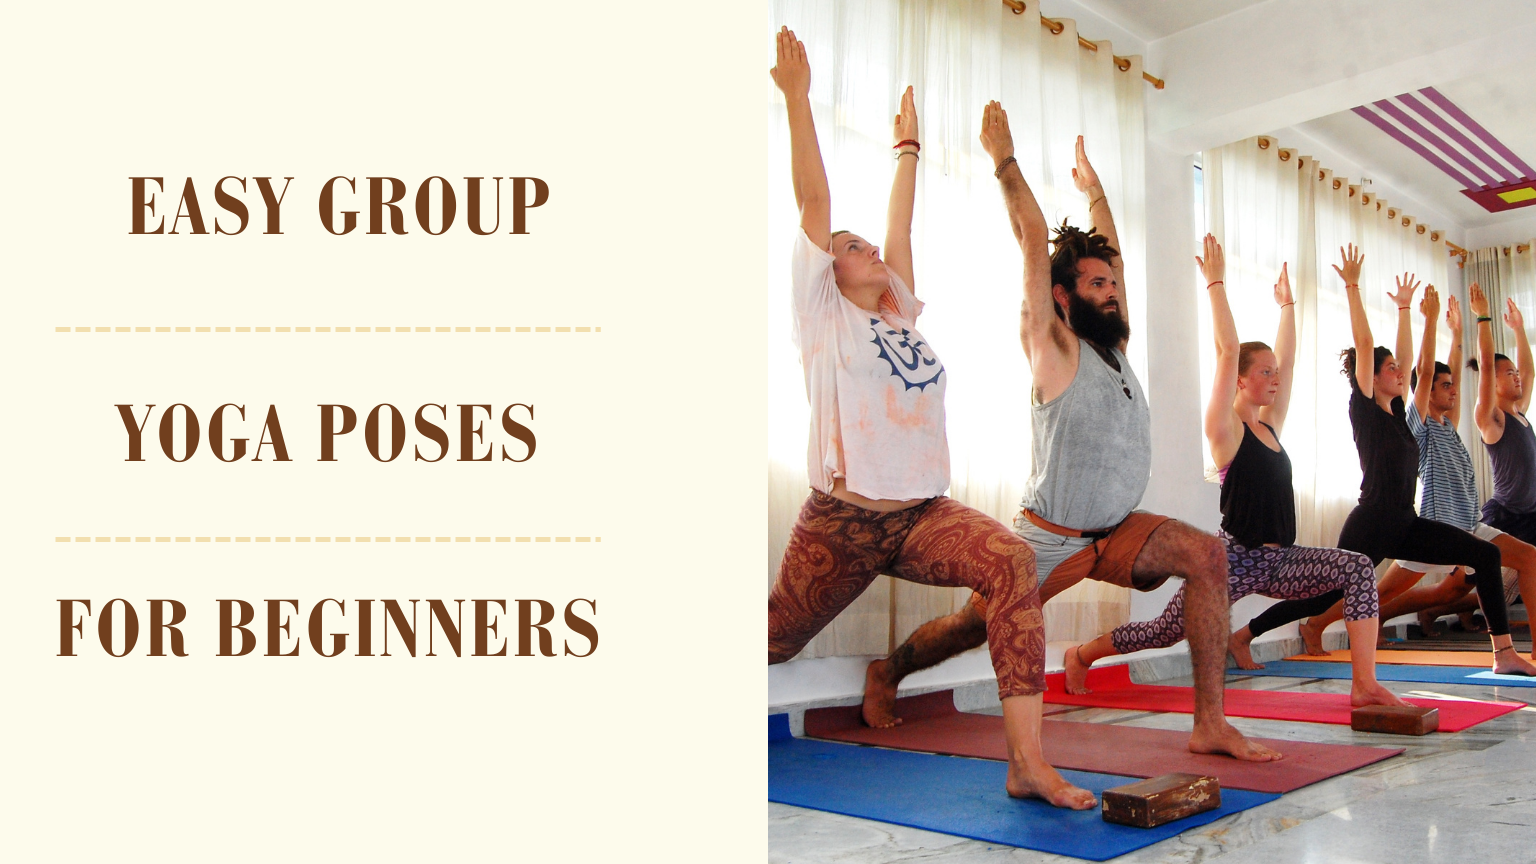 Asian Group Yoga Stock Illustrations, Cliparts and Royalty Free Asian Group  Yoga Vectors